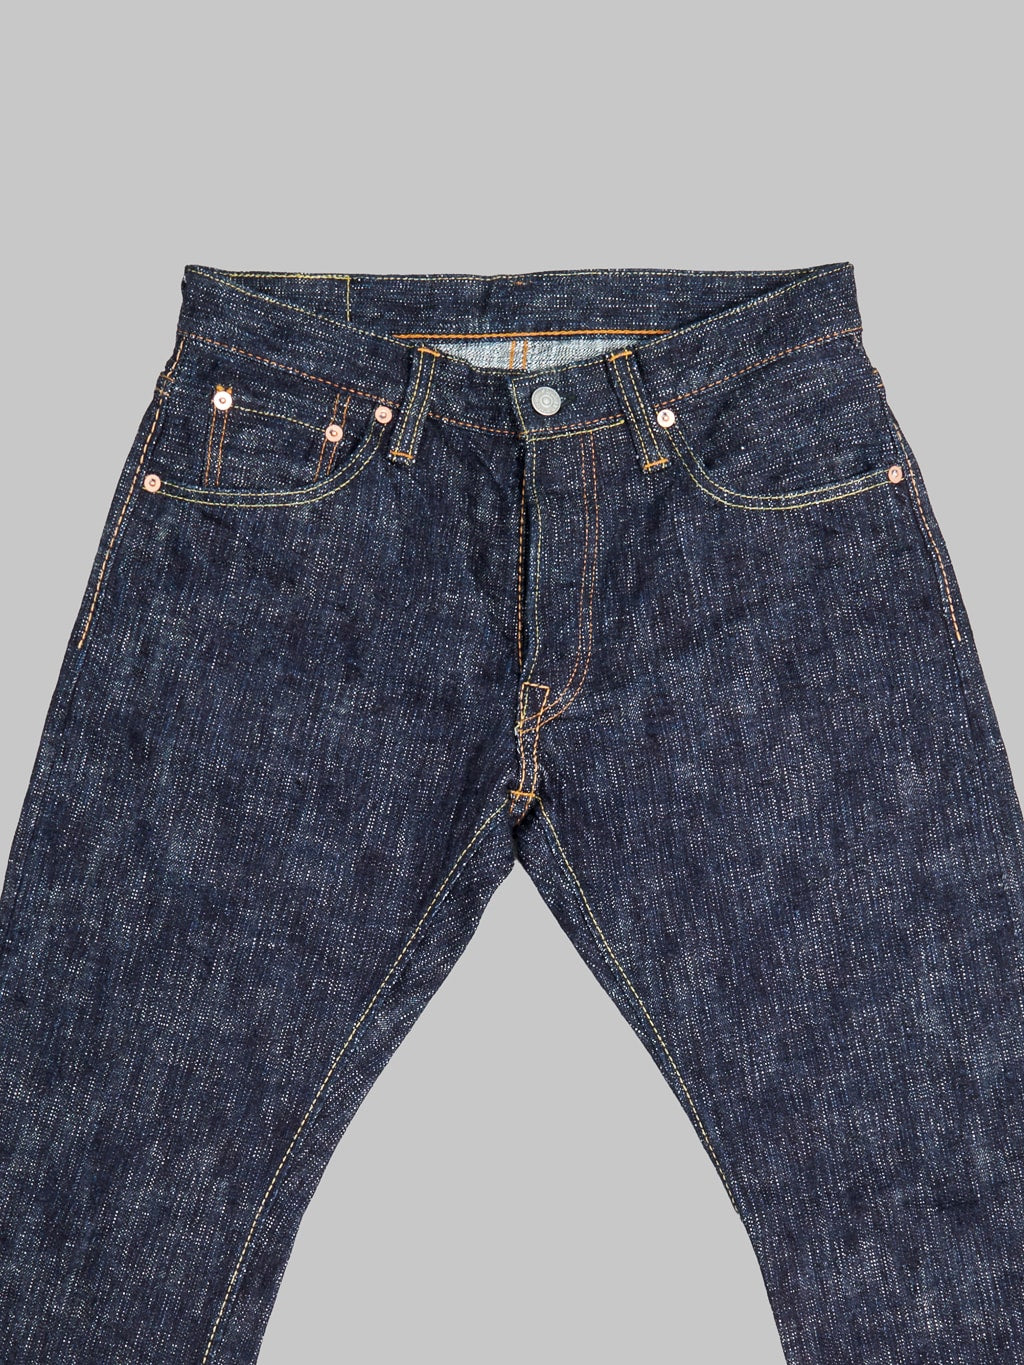 Pure Blue Japan WSB-013 "Double Slub" 16oz Slim Tapered Jeans